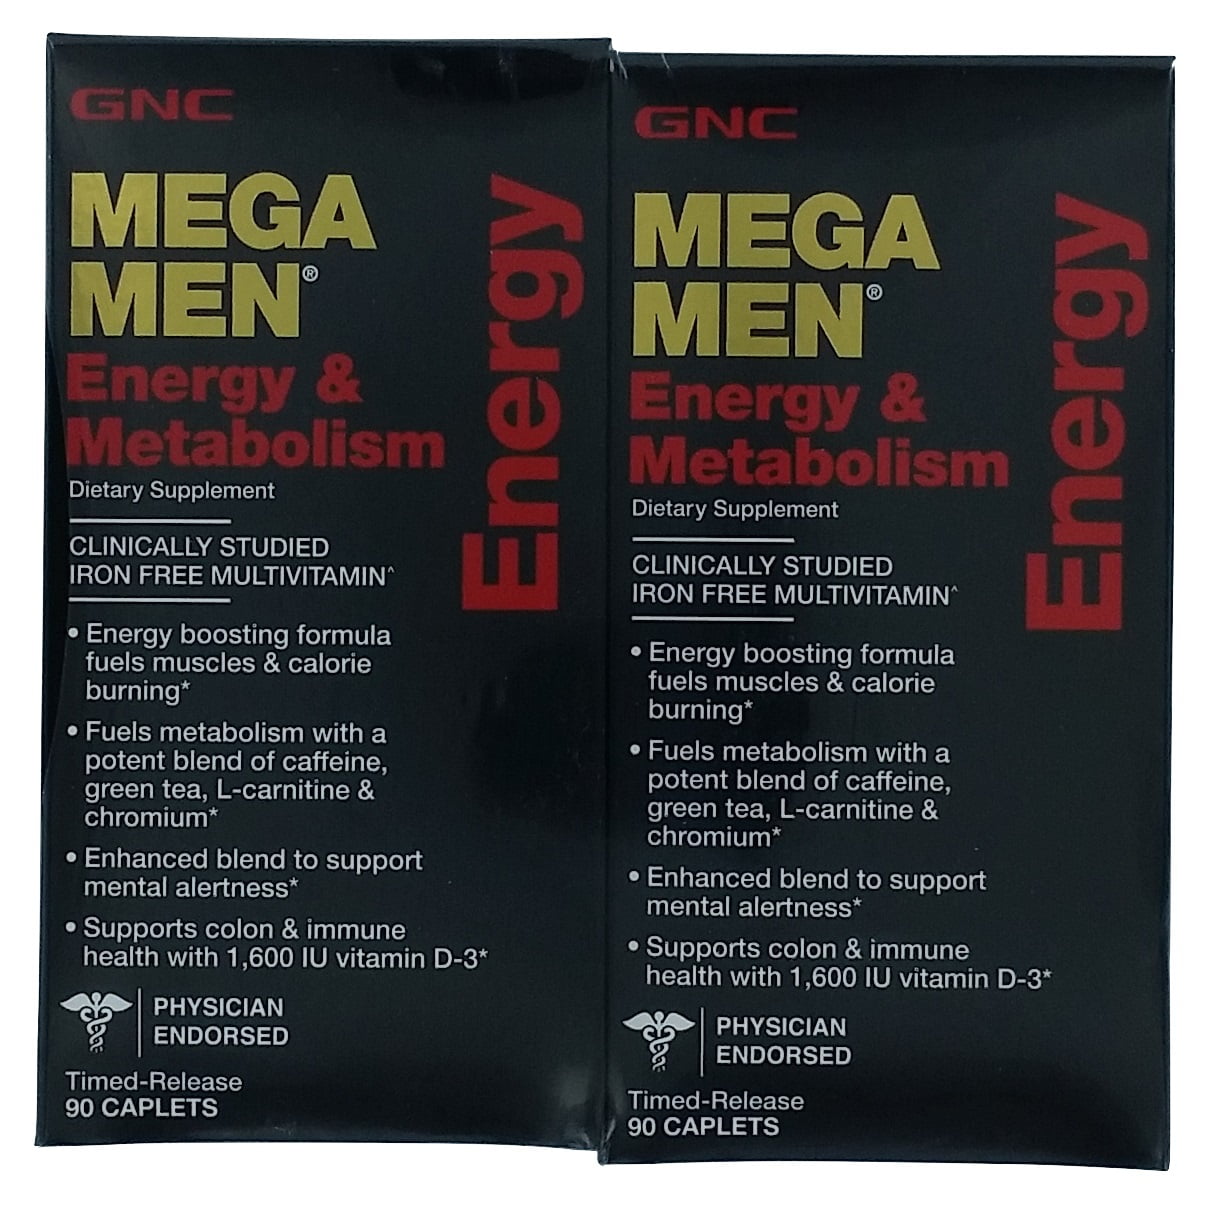 GNC Mega Men Energy & Metabolism Multivitamins 180 Caplets 2 x 90 ct bottles 